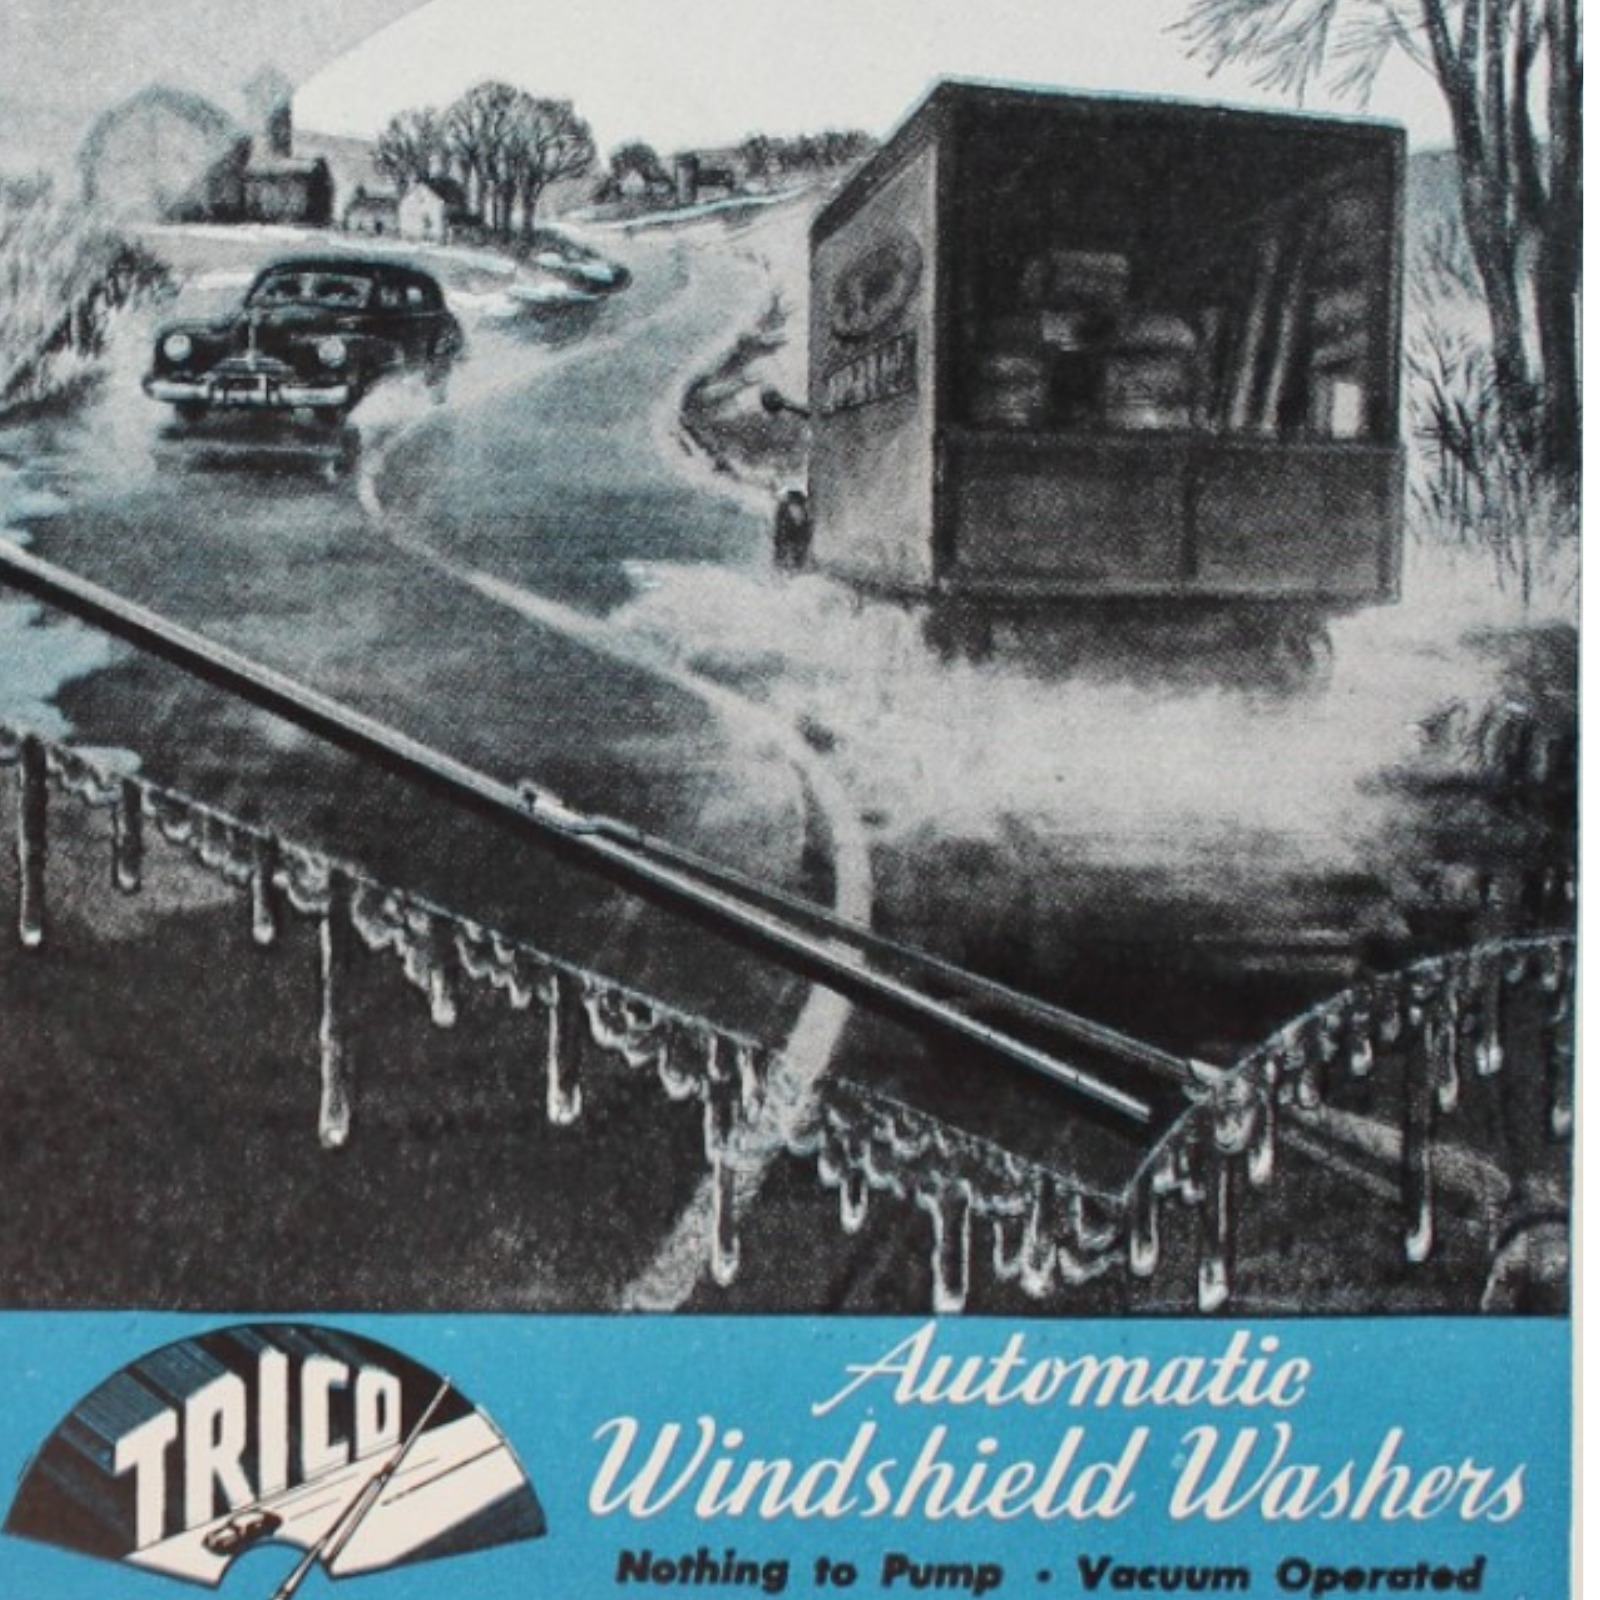 TRICO BUFFALO NY WINDSHIELD WASHERS 1948 PRINT AD RETRO VINTAGE WIPERS CAR TRUCK